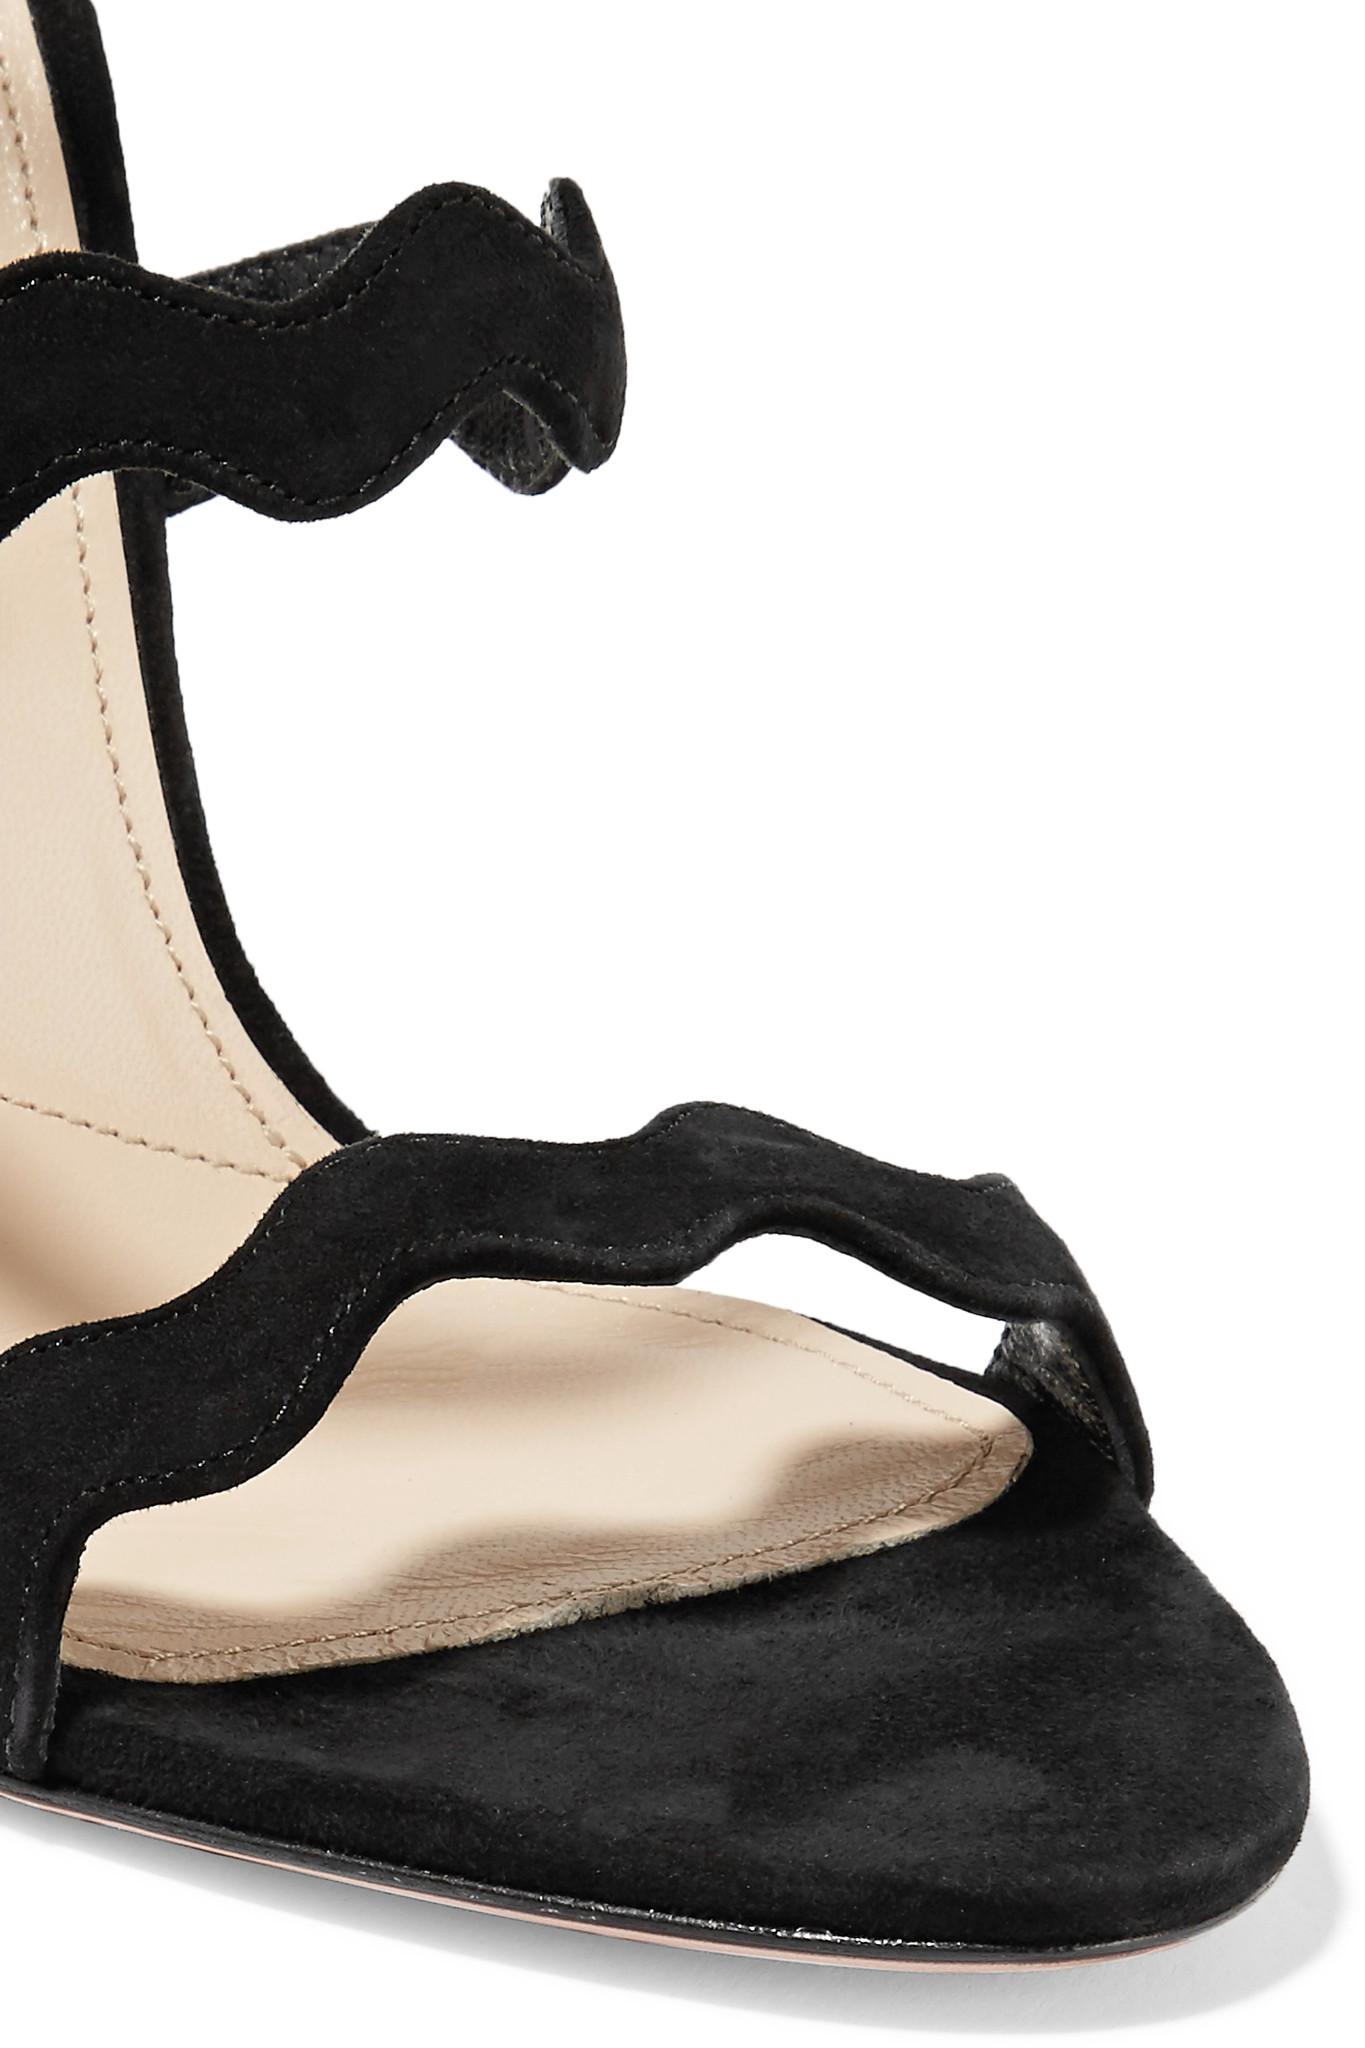 Prada Scalloped Suede Sandals in Black - Lyst